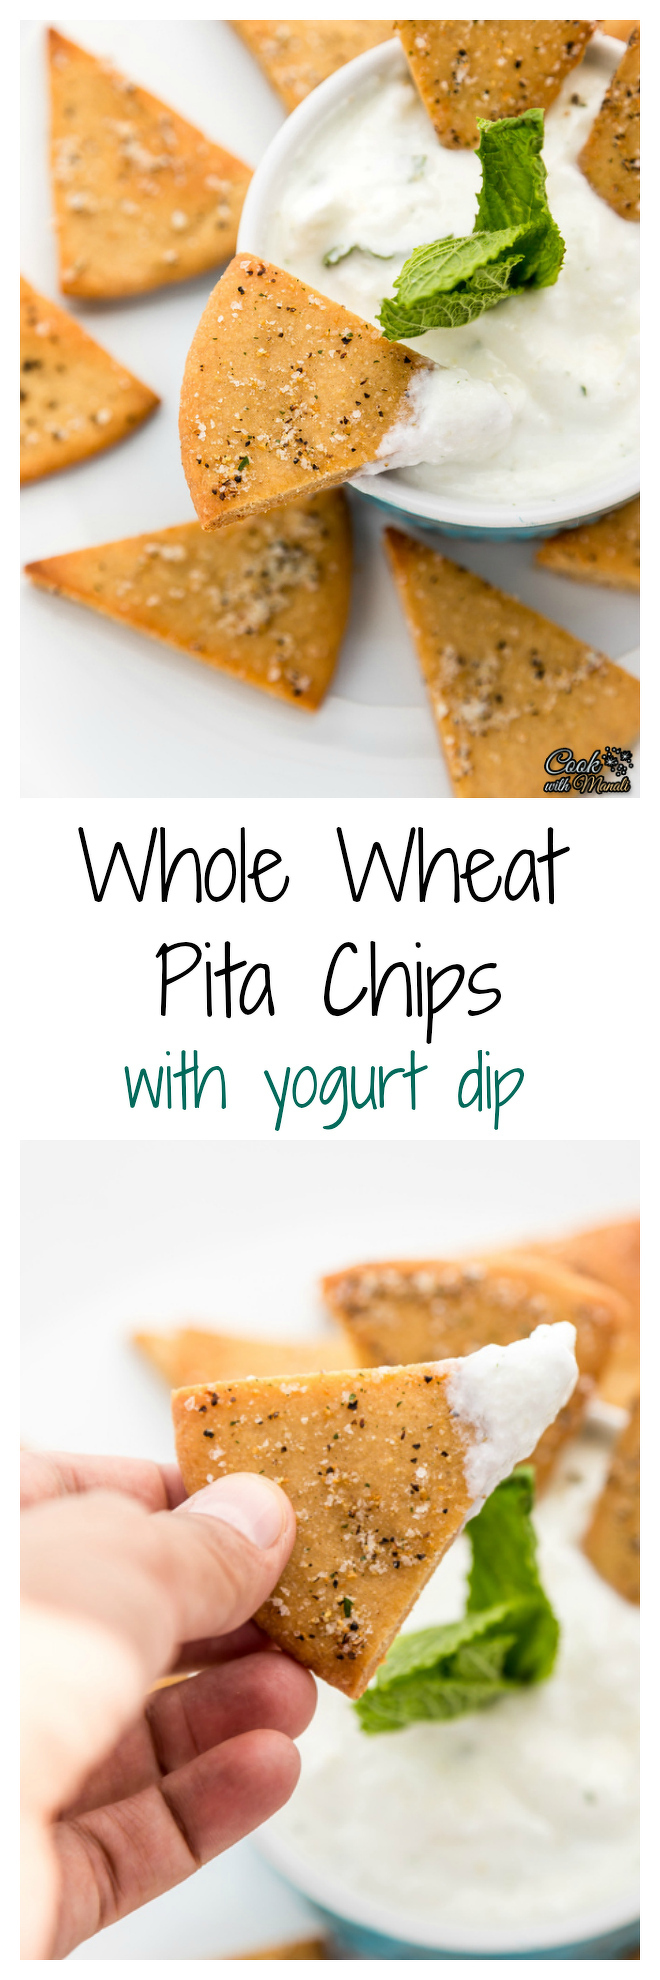 Whole-Wheat-Pita-Chips-With-Yogurt-Dip-Collage-nocwm